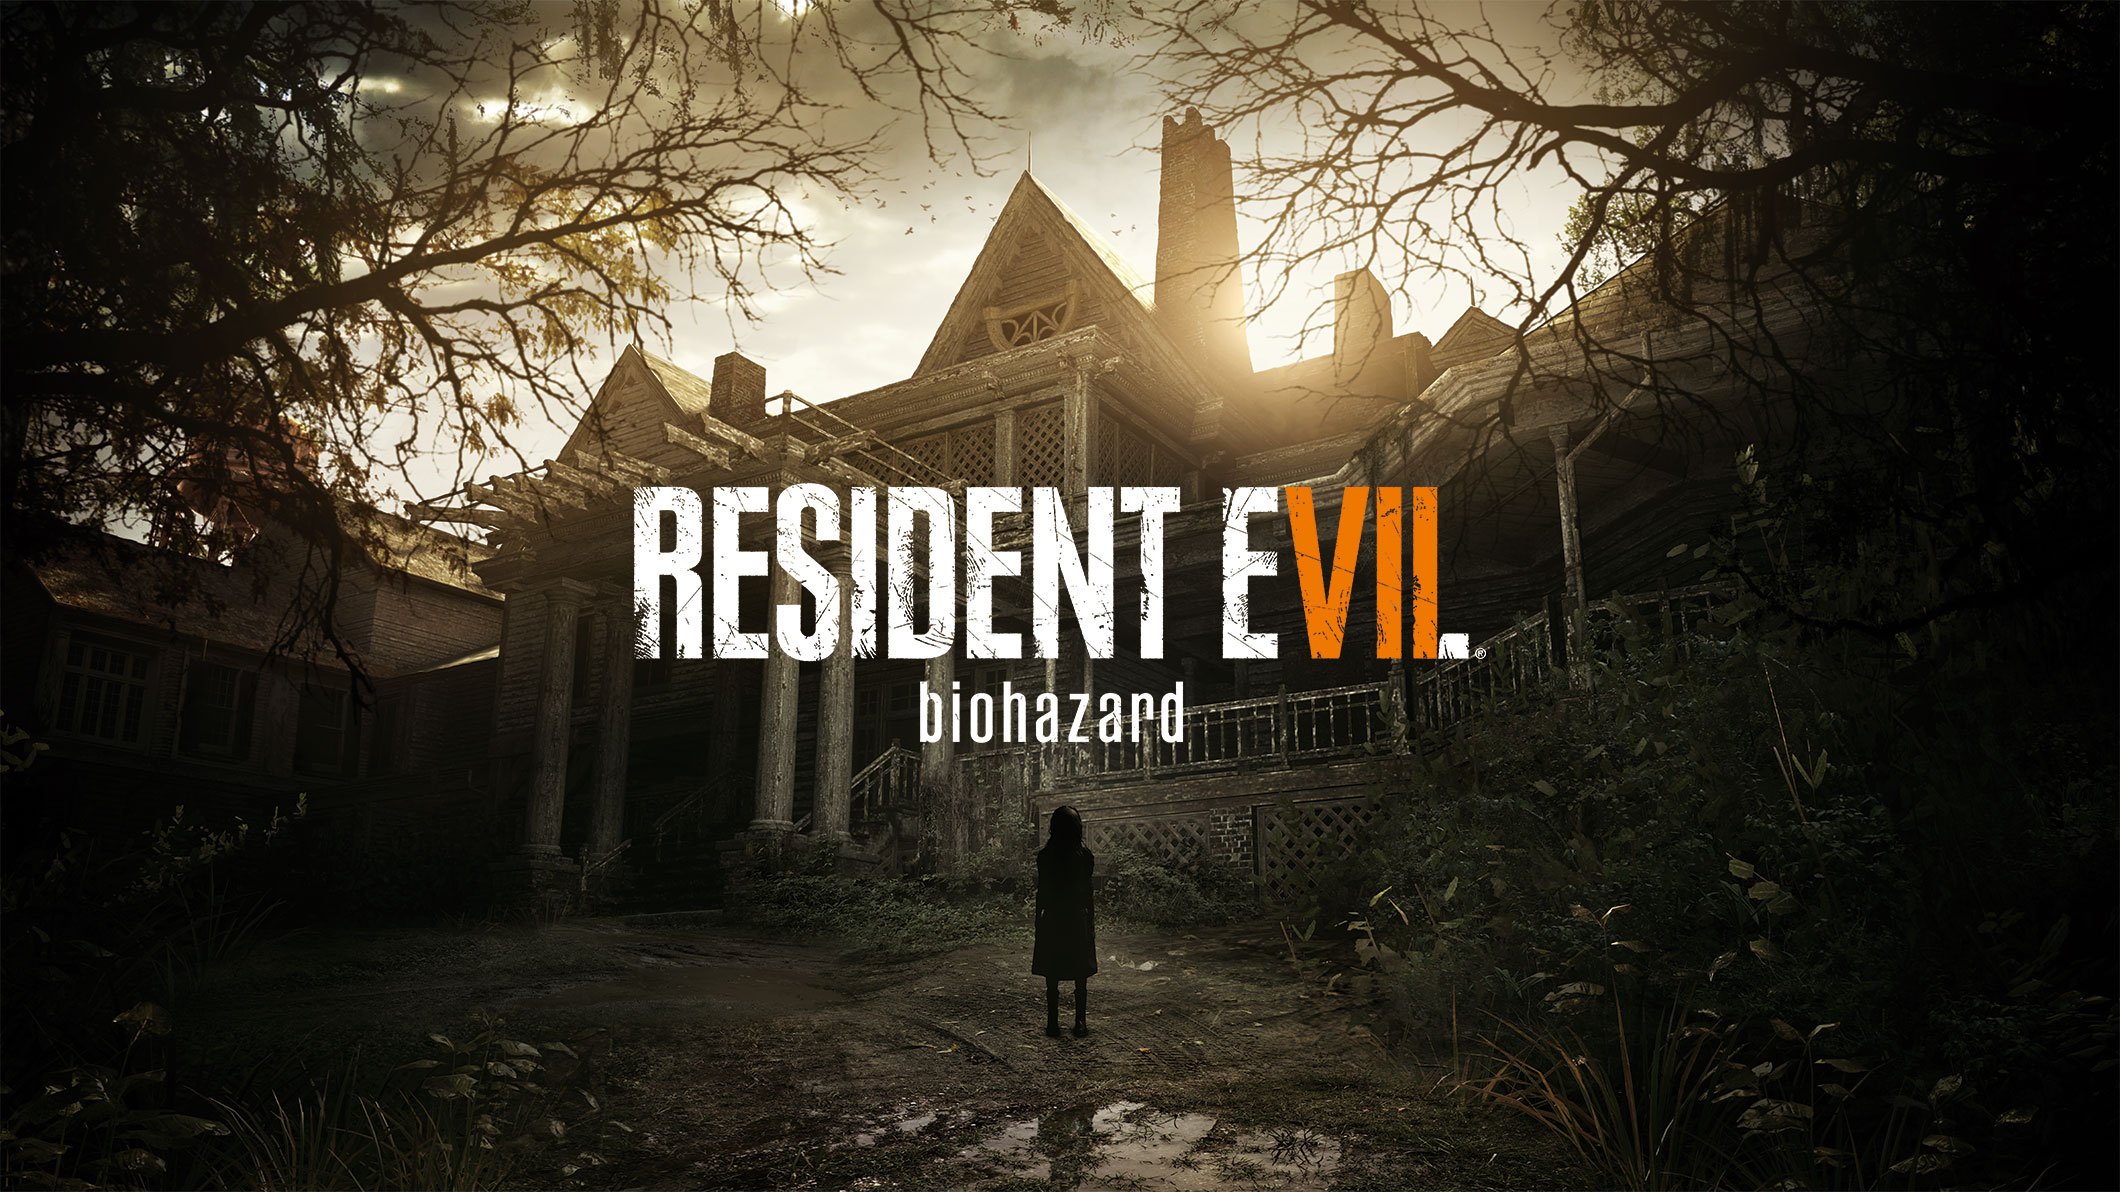 Resident Evil 7 biohazard - Часть 6 - Финал